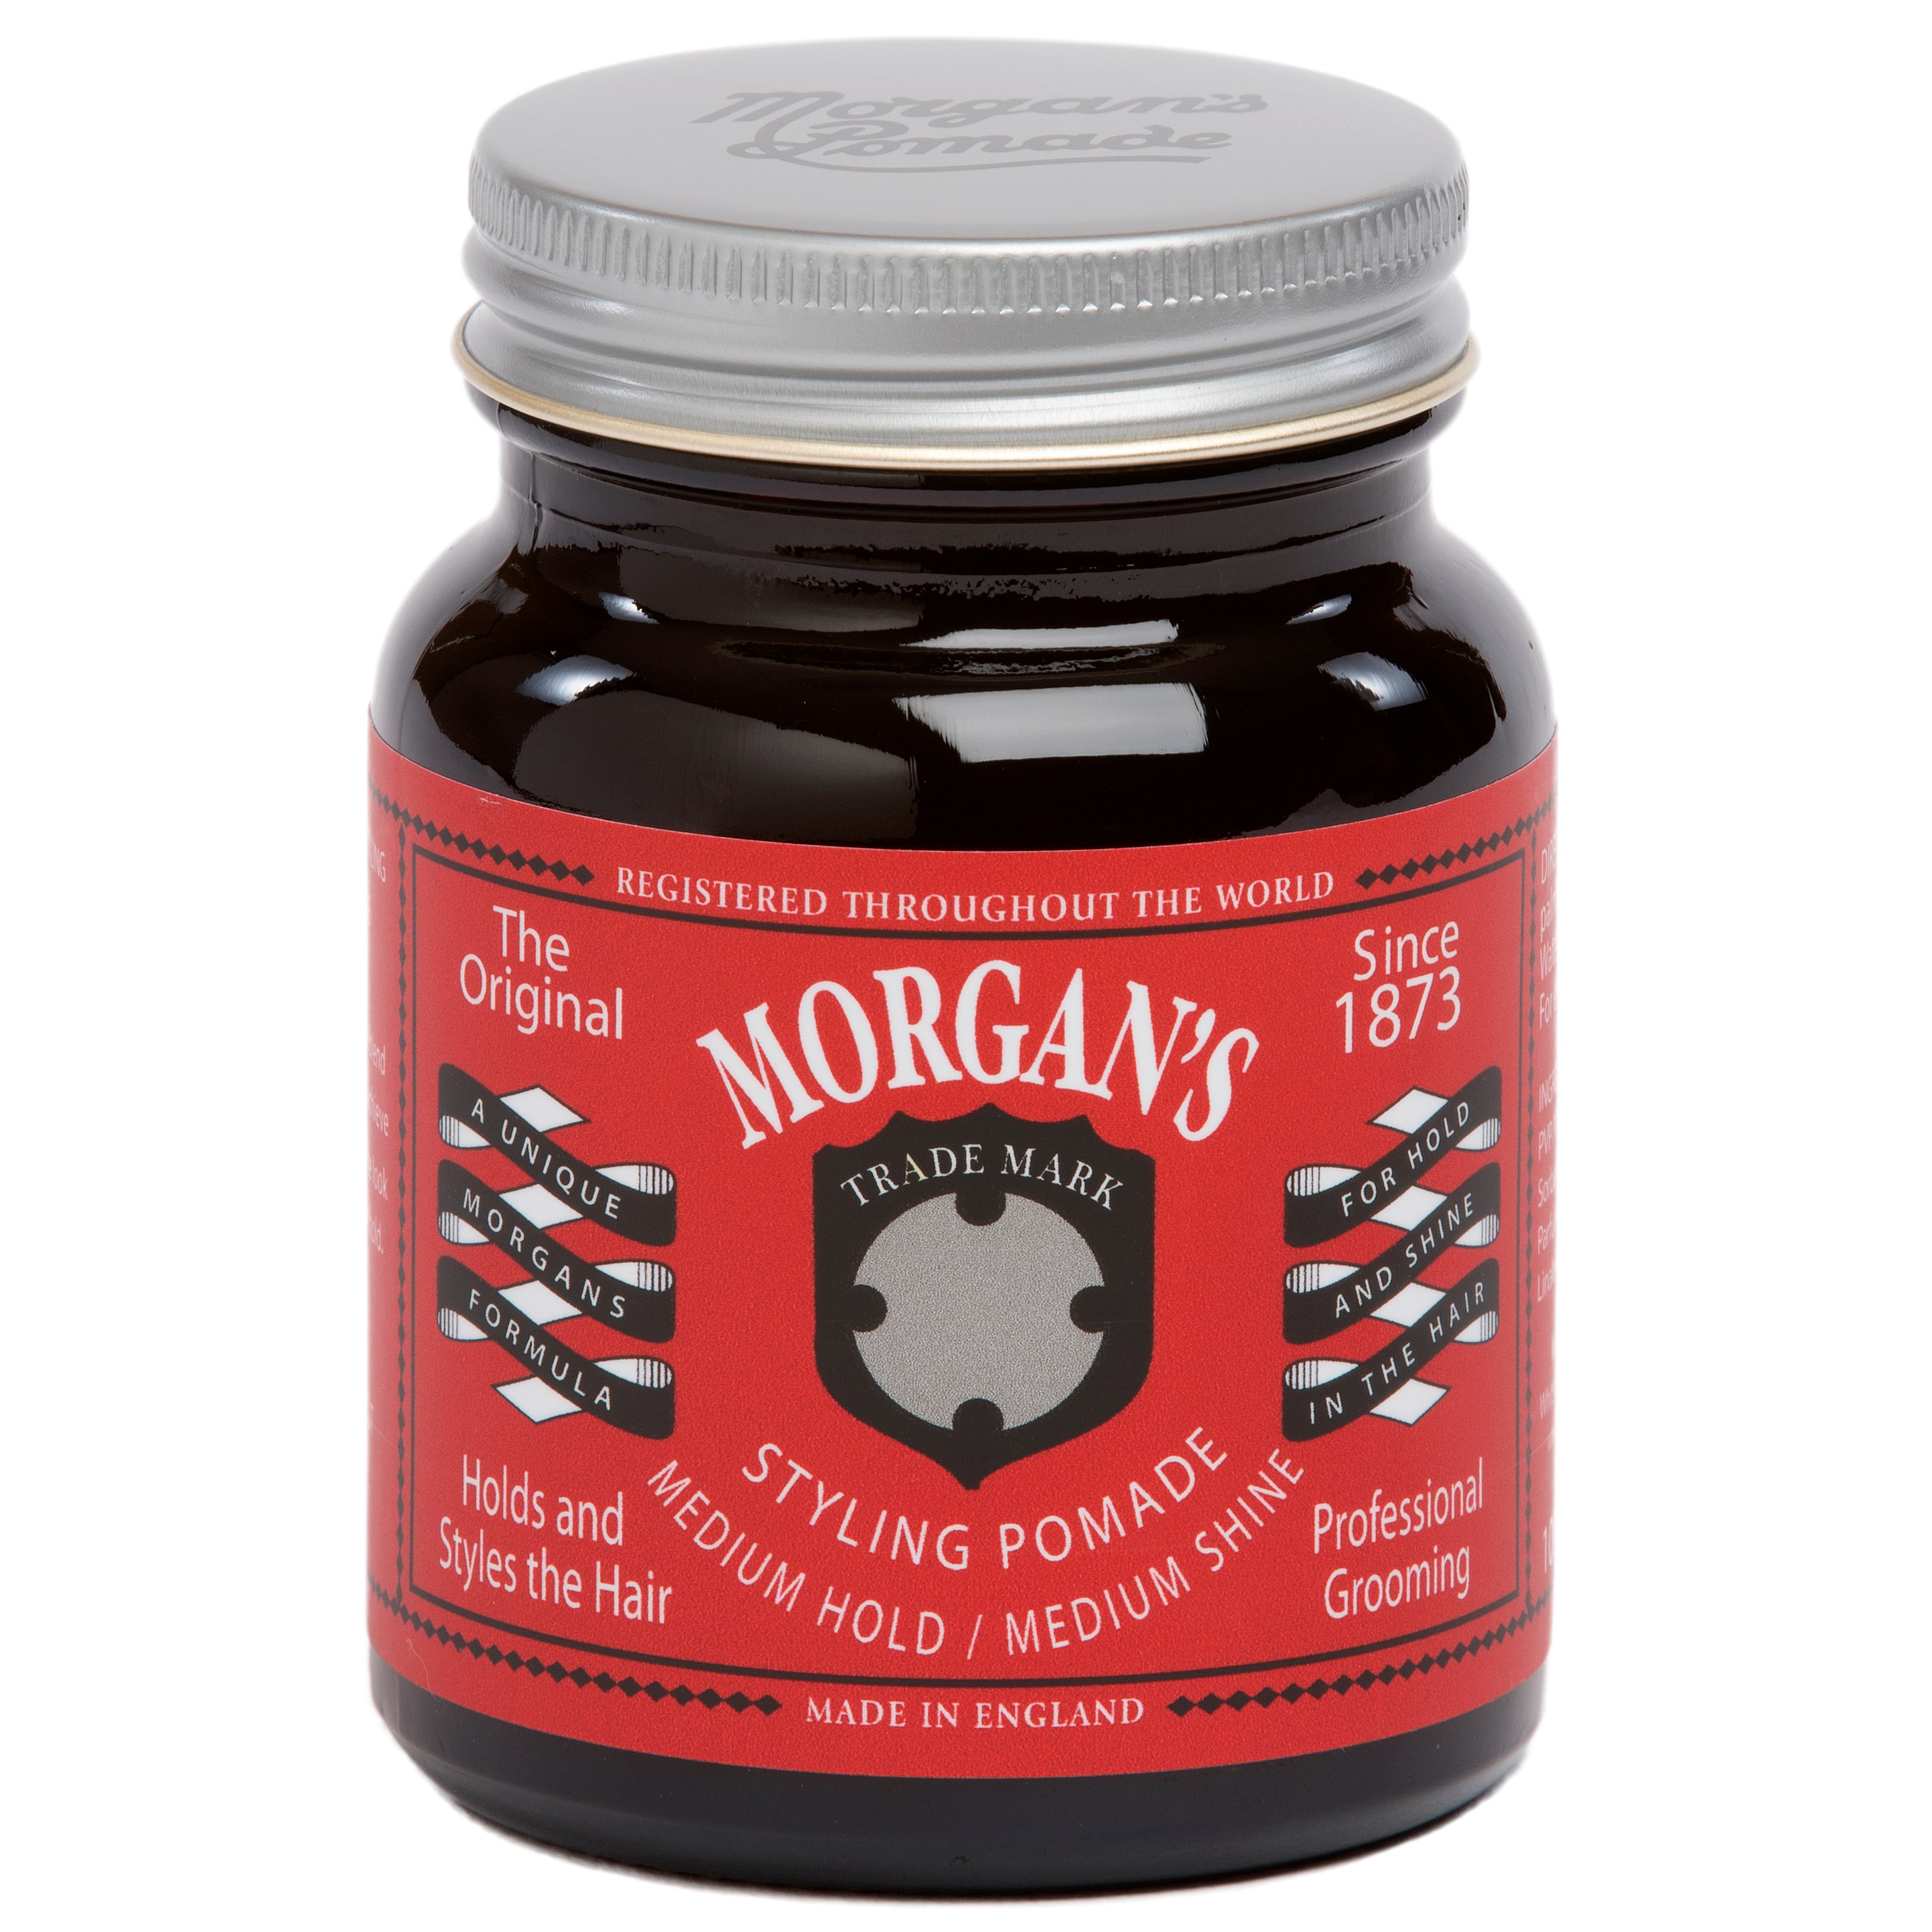 Morgans Pomade Styling Pomade Red Label - Medium Hold Medium Shine